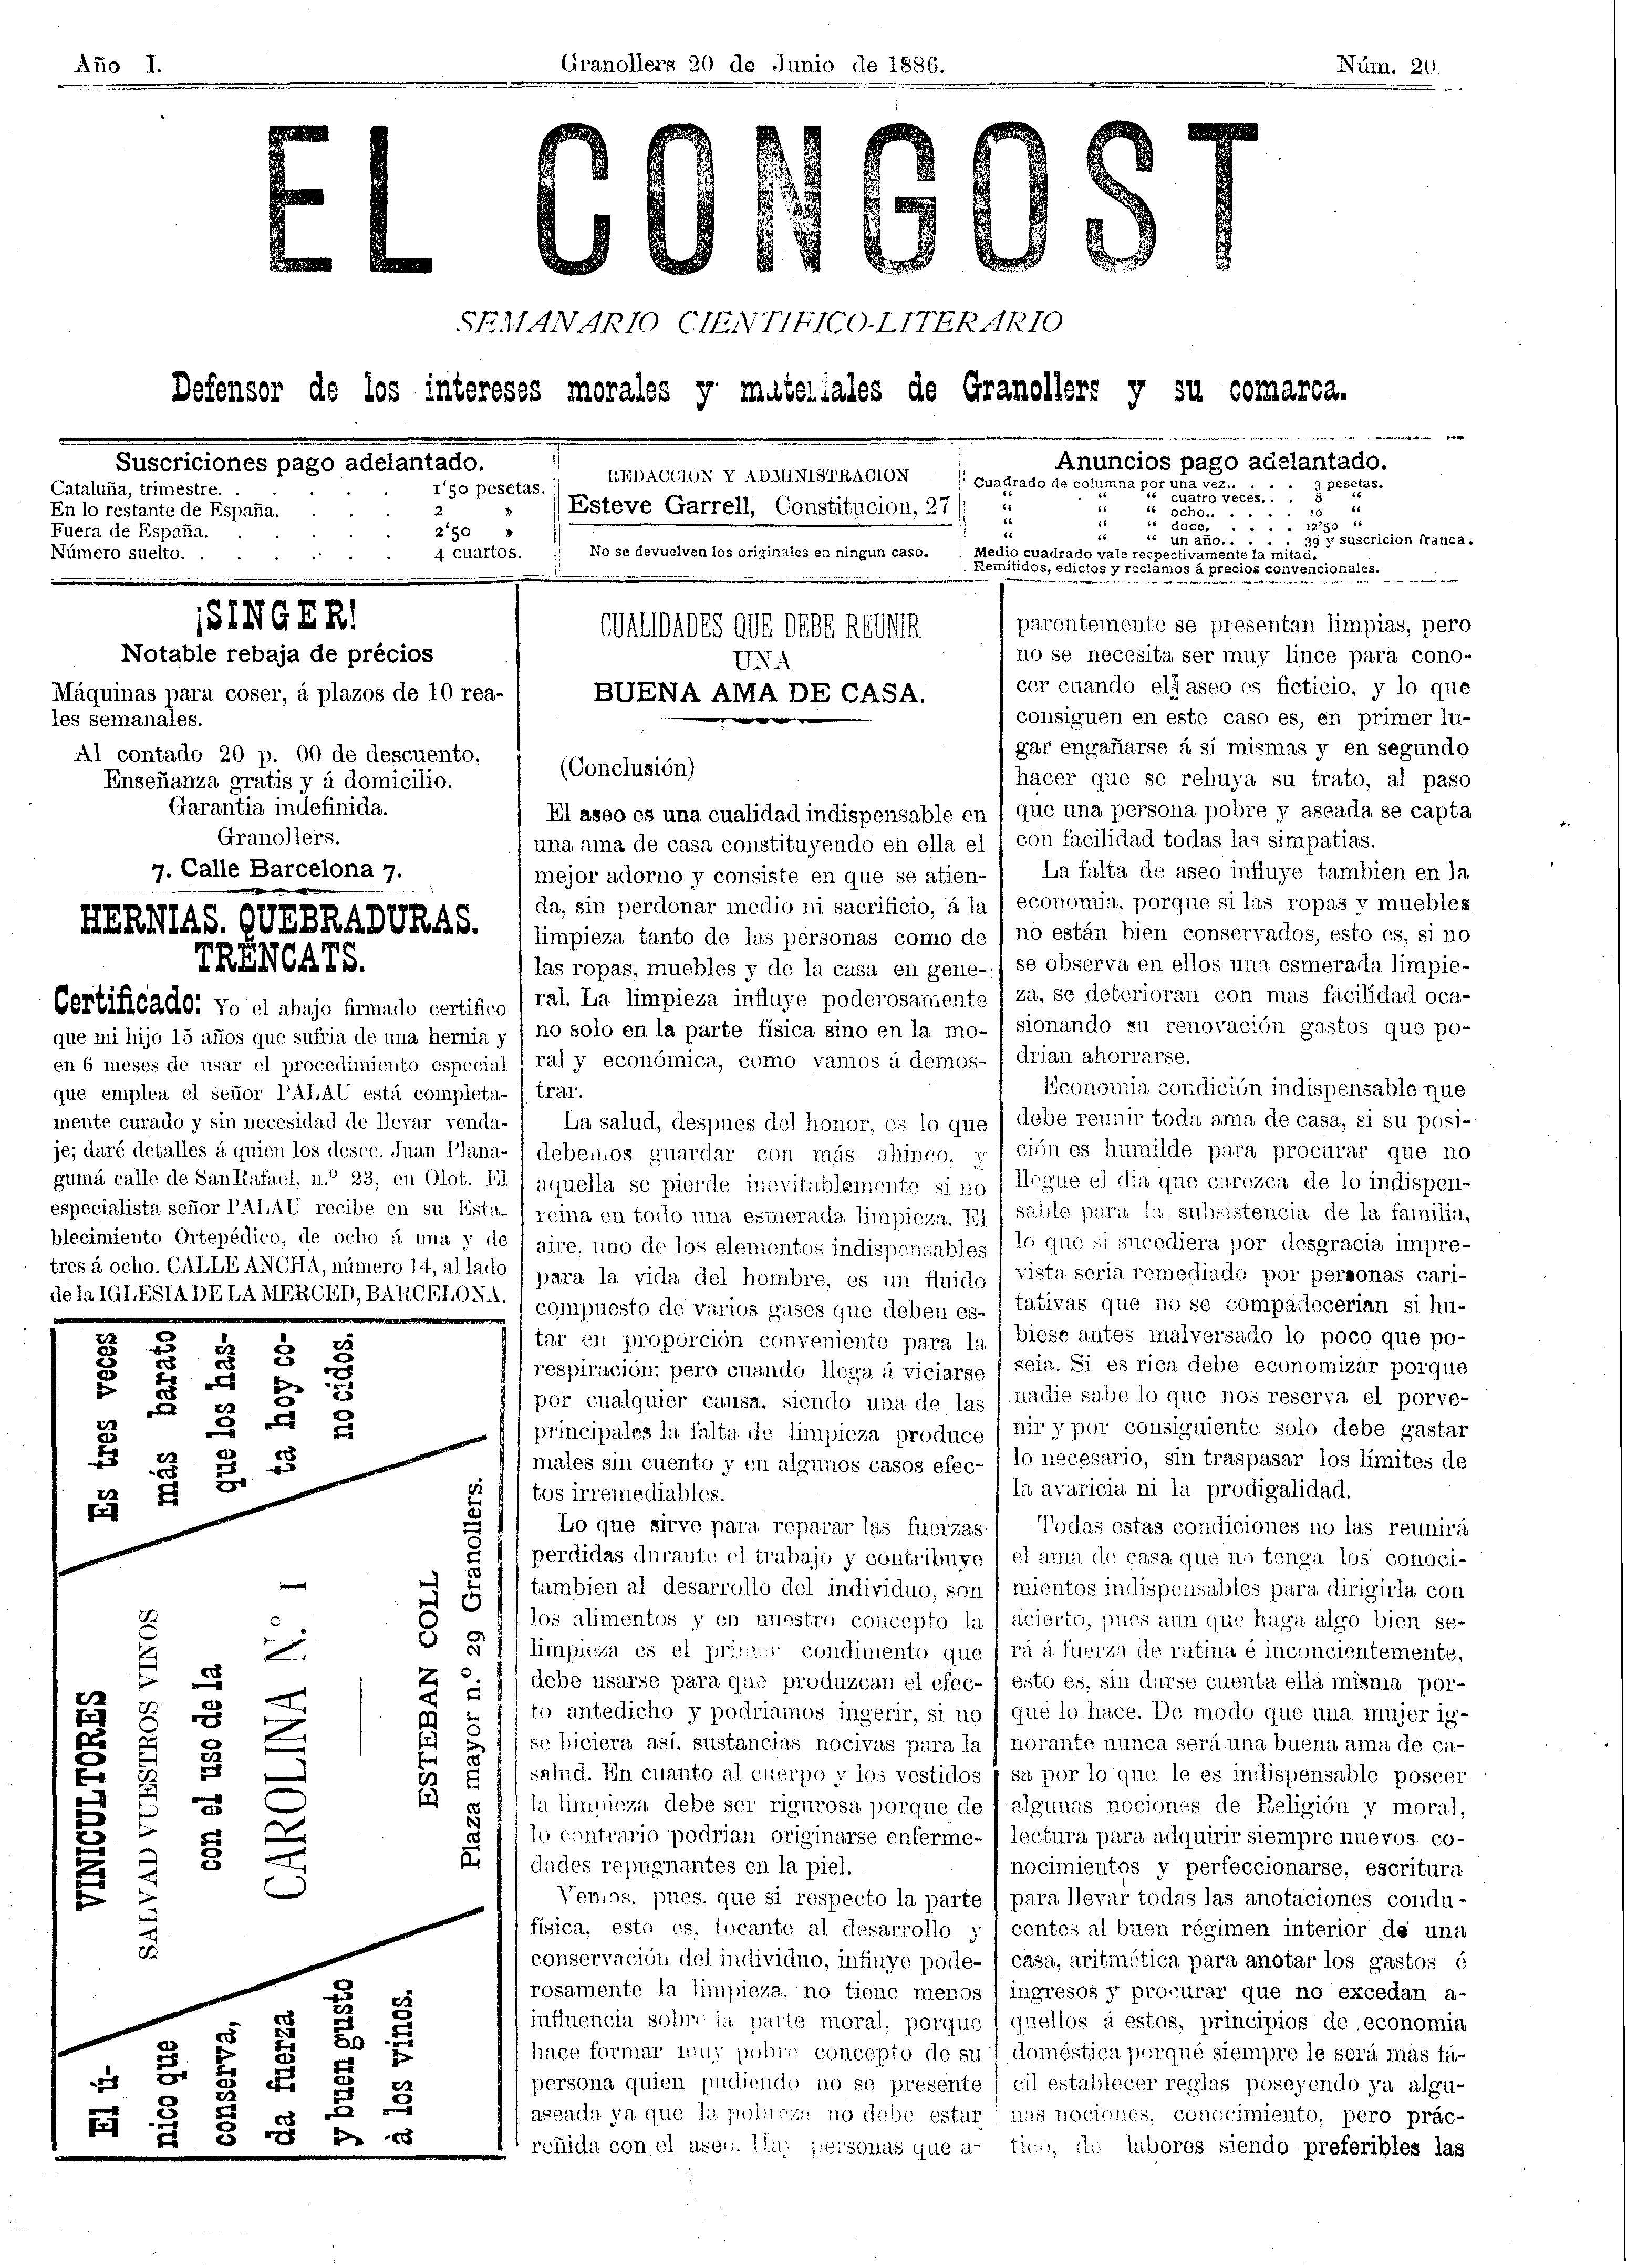 El Congost, 20/6/1886 [Ejemplar]